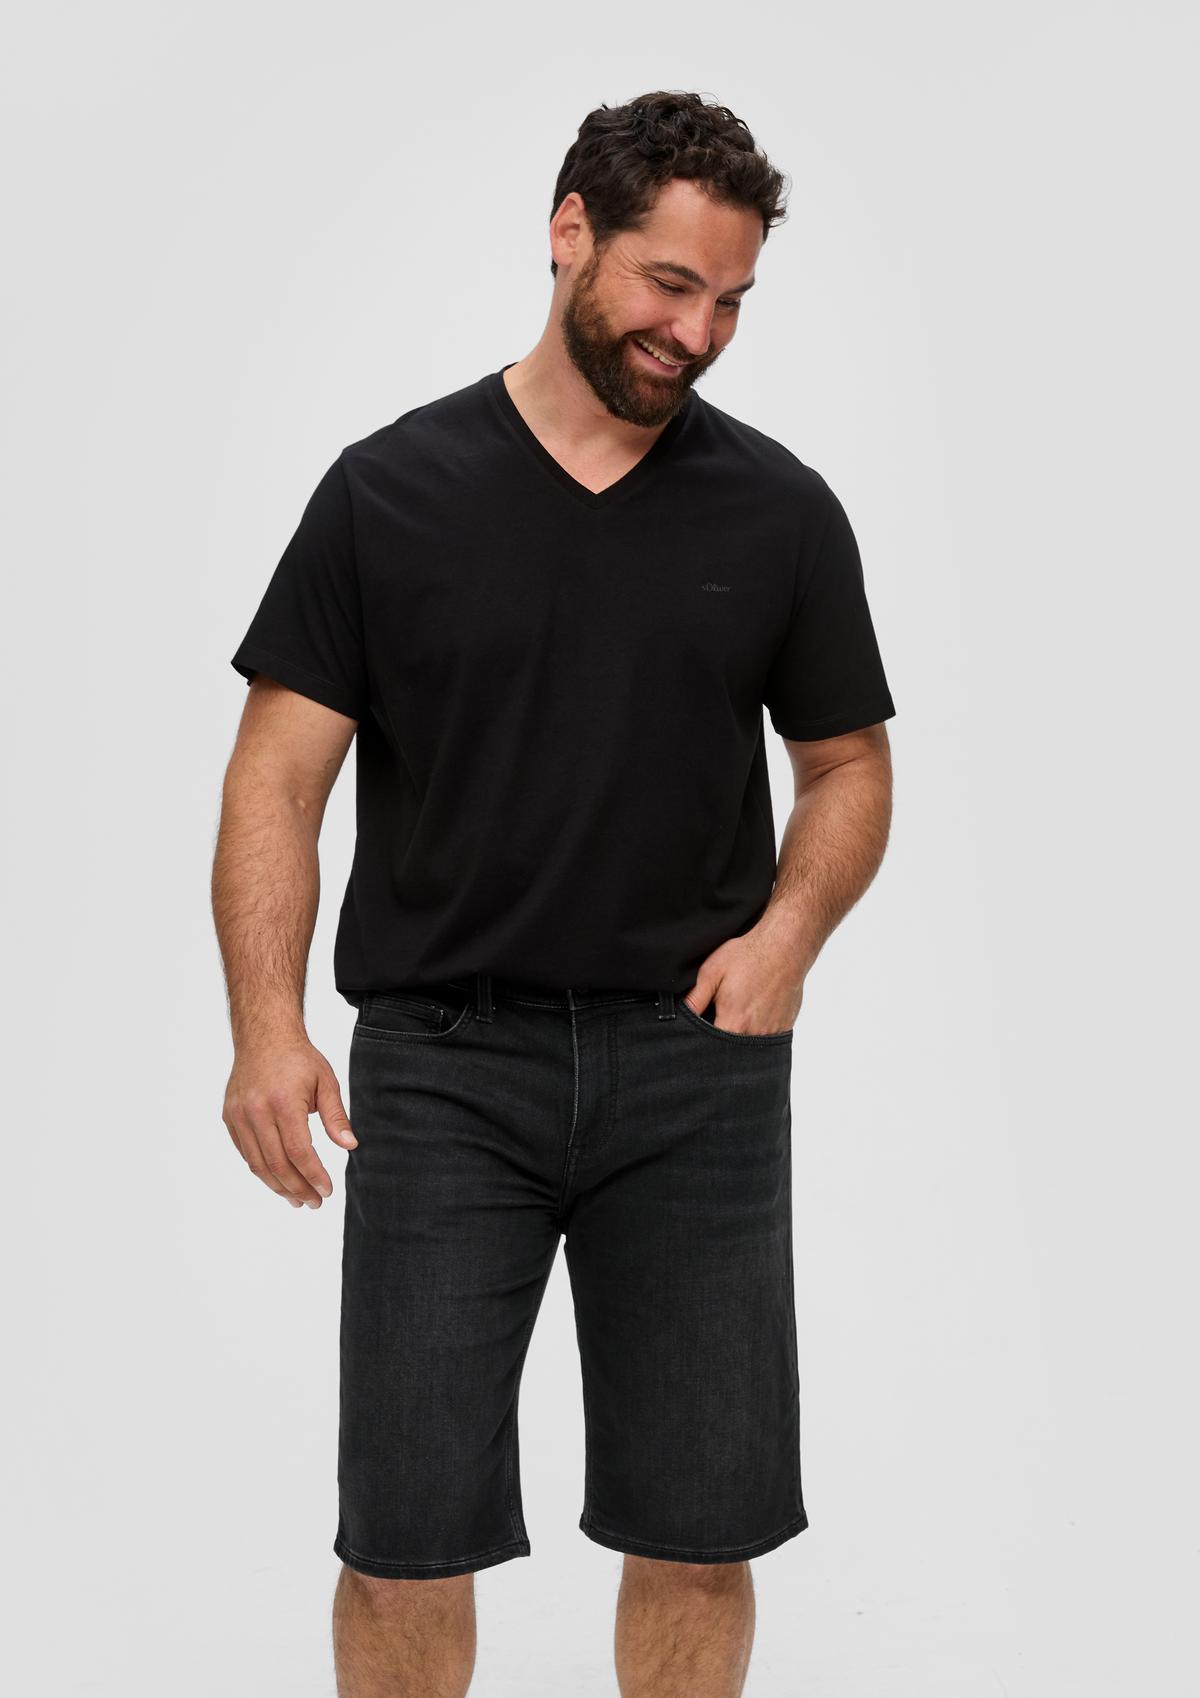 Mauro Bermuda jeans / regular fit / mid rise / straight leg